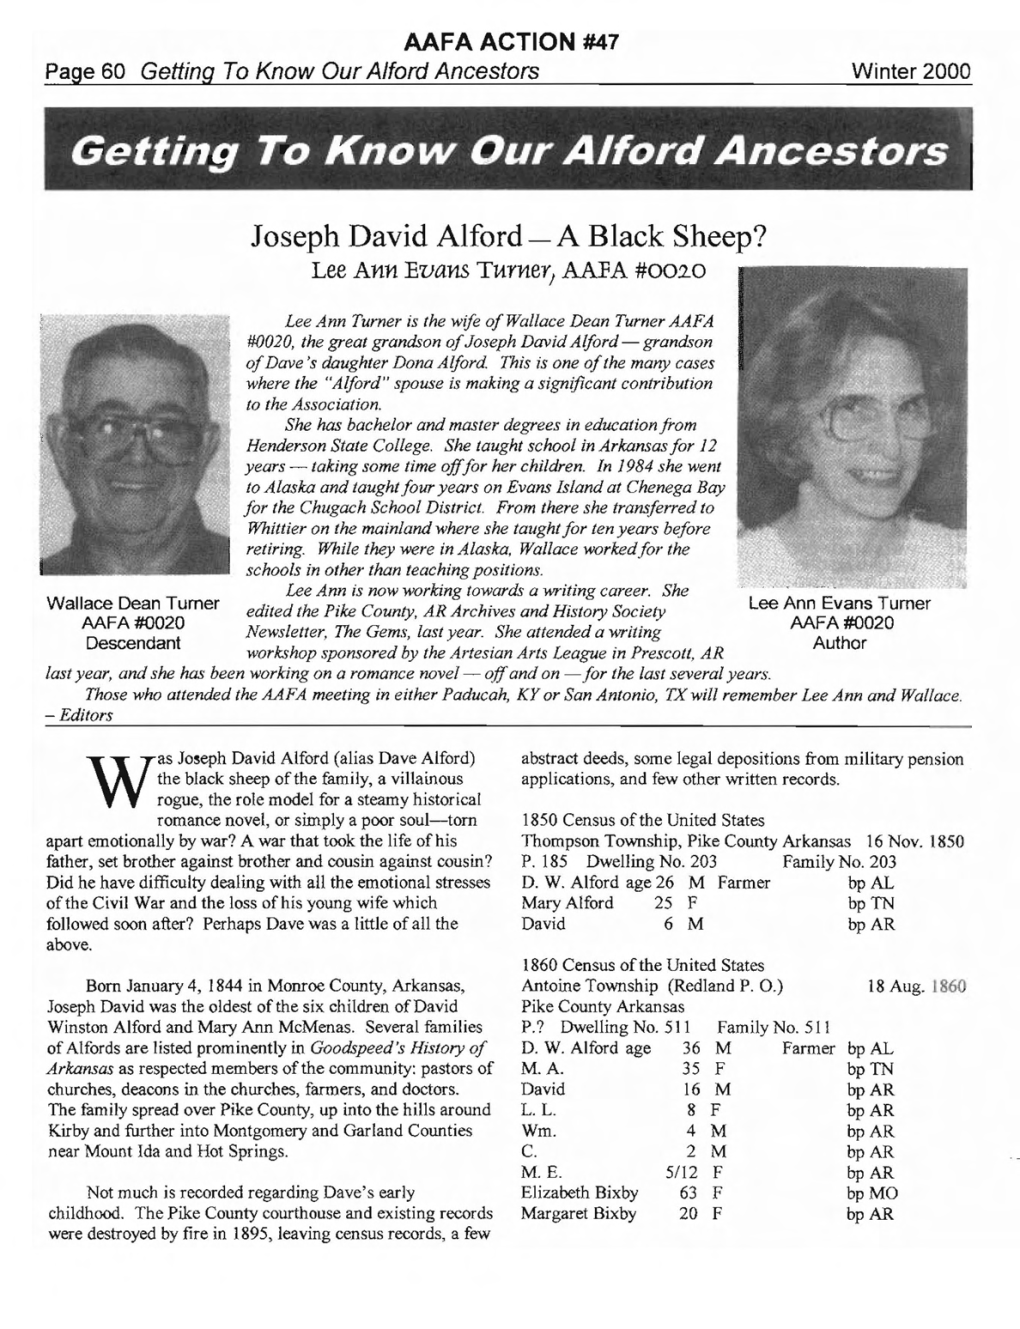 Joseph David Alford-A Black Sheep? Lee Ann Evans Turner! AAFA #0020